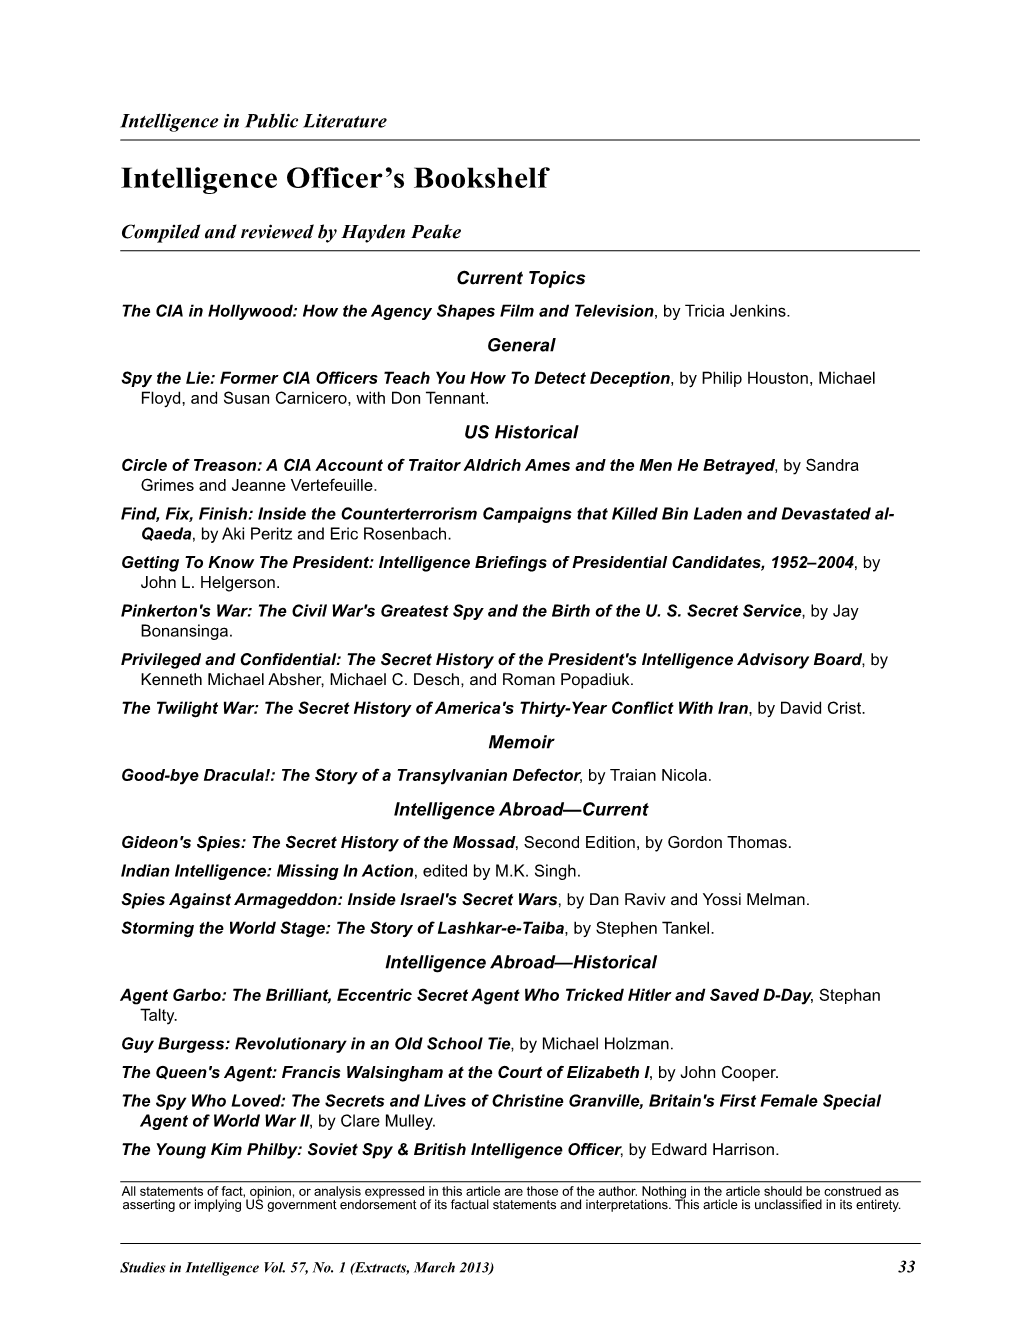 Intelligence Officer's Bookshelf, by Hayden B